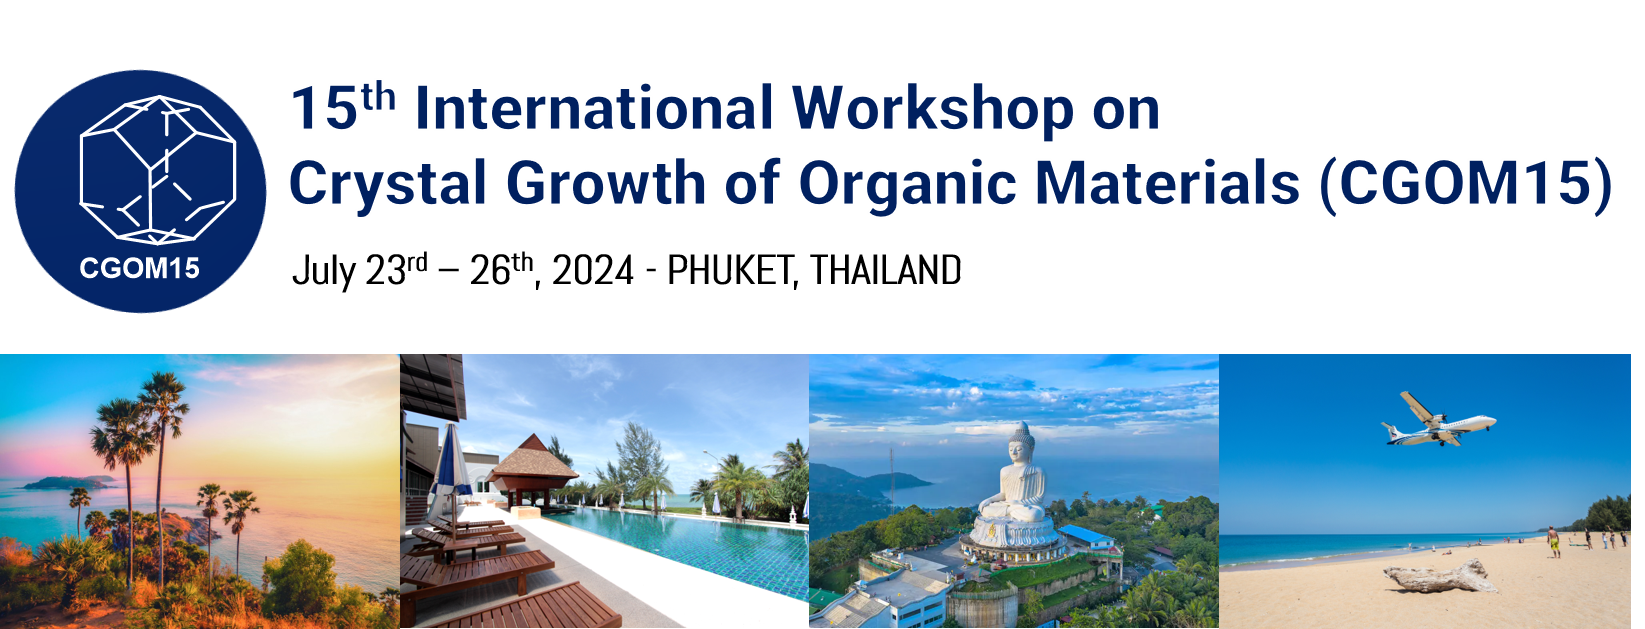 15th International on Crystal Growth of Organic Materials (CGOM15)